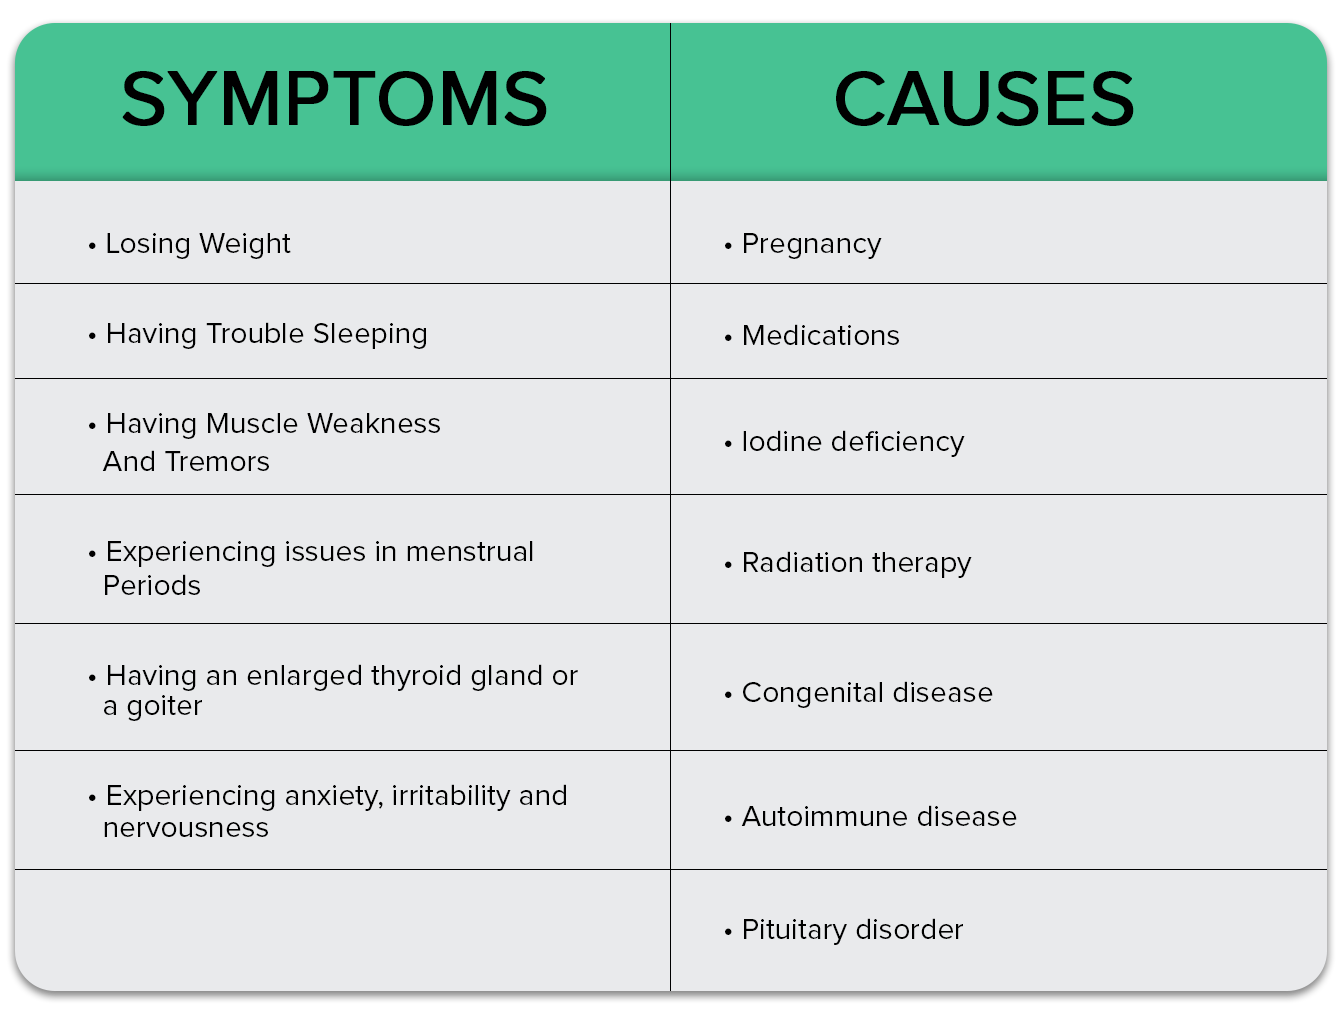 SYMPTOMS vs CAUSES